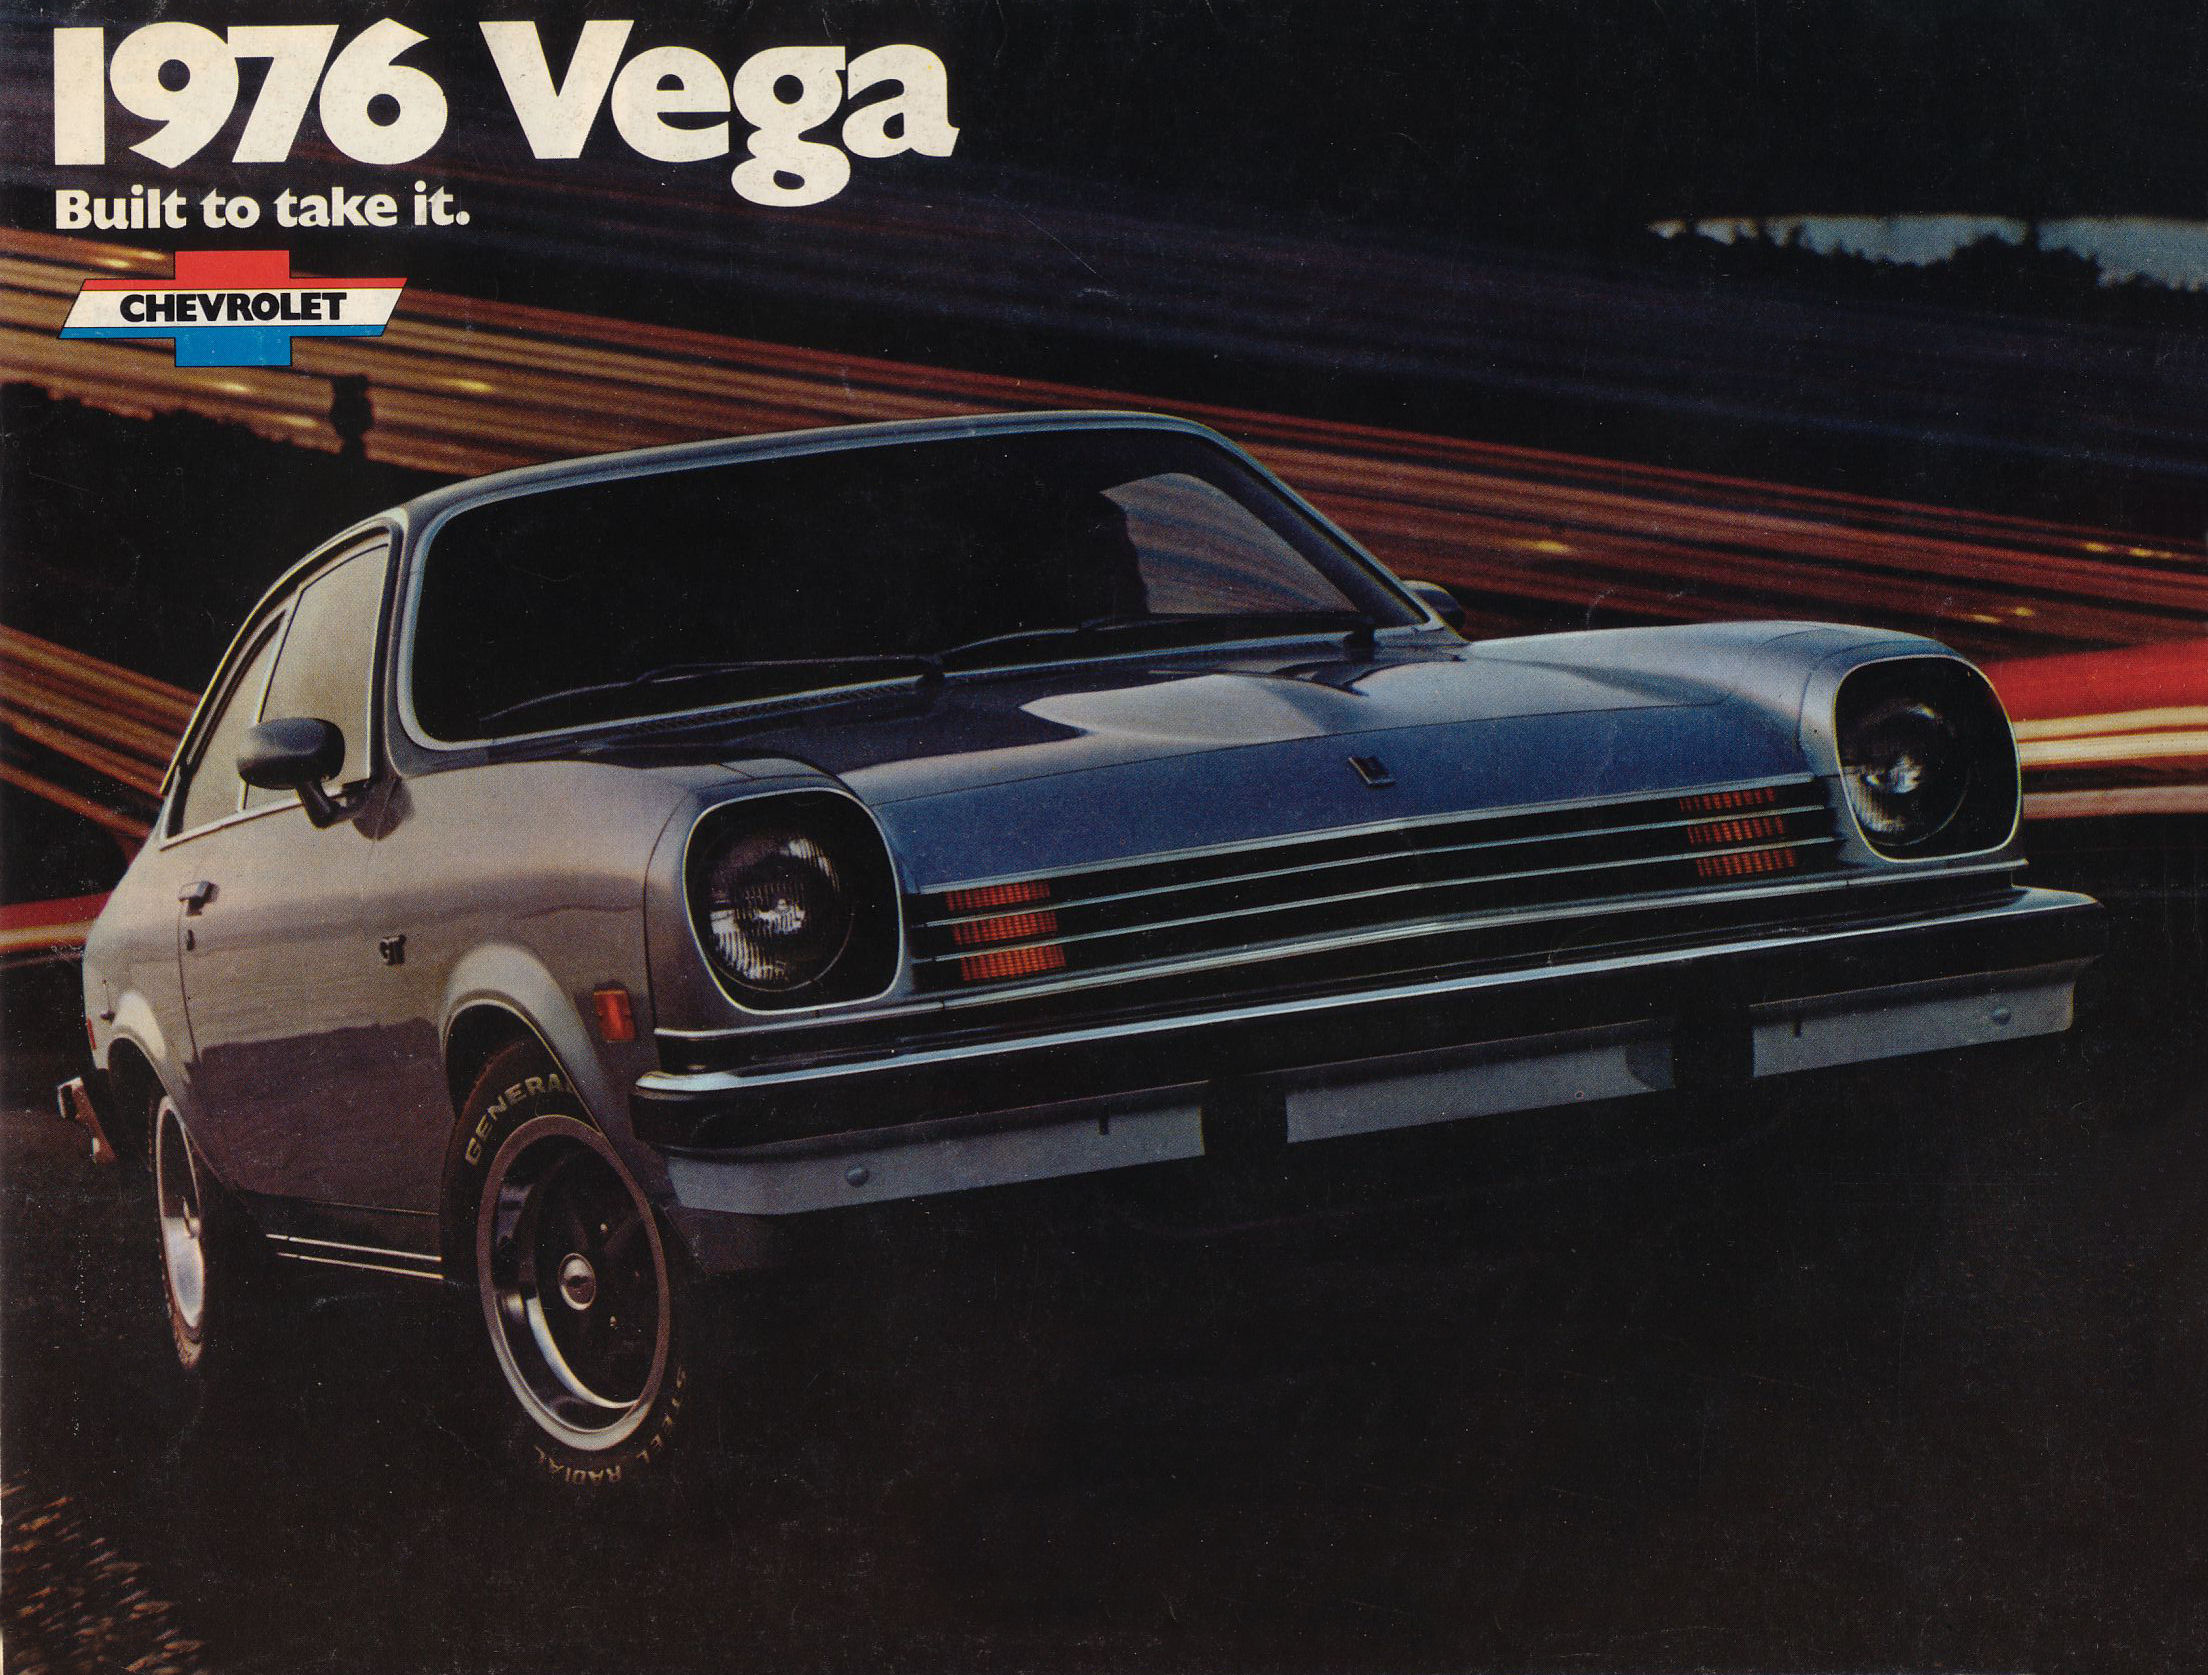 1976 Chevrolet Vega Brochure